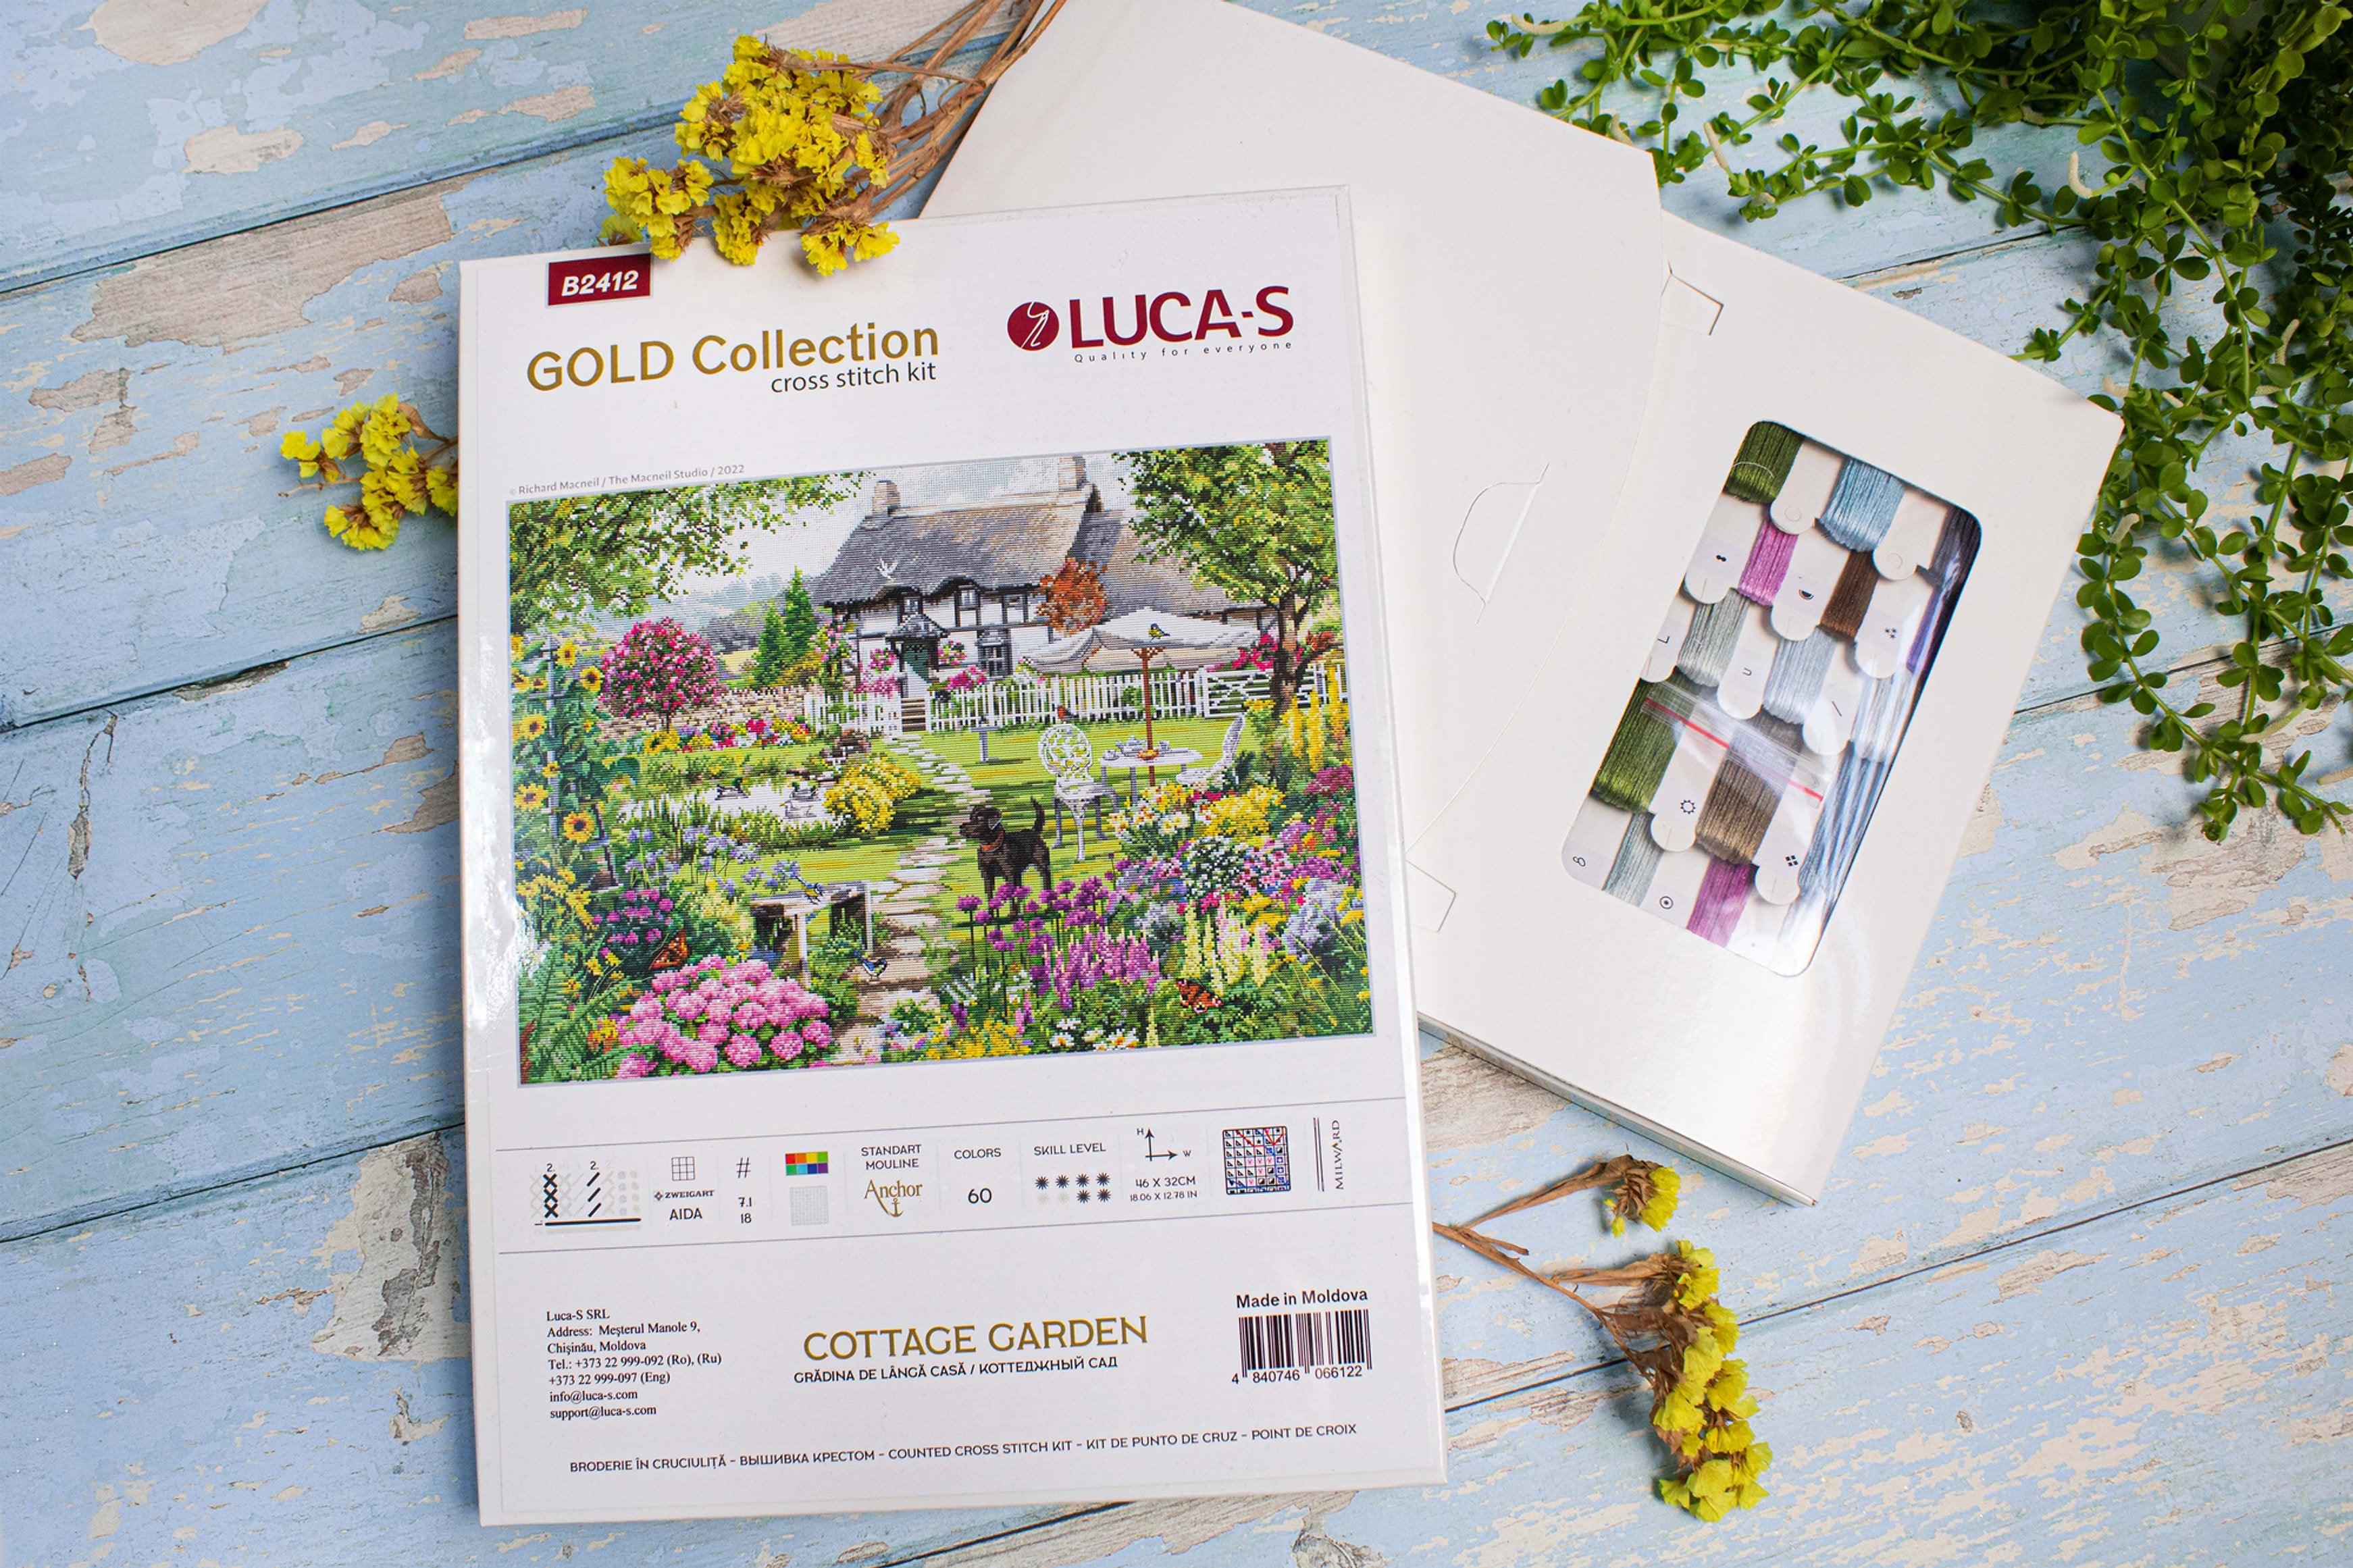 Cross Stitch Kit Luca-S GOLD - Cottage Garden, B2412 - Luca-S Cross Stitch Kits